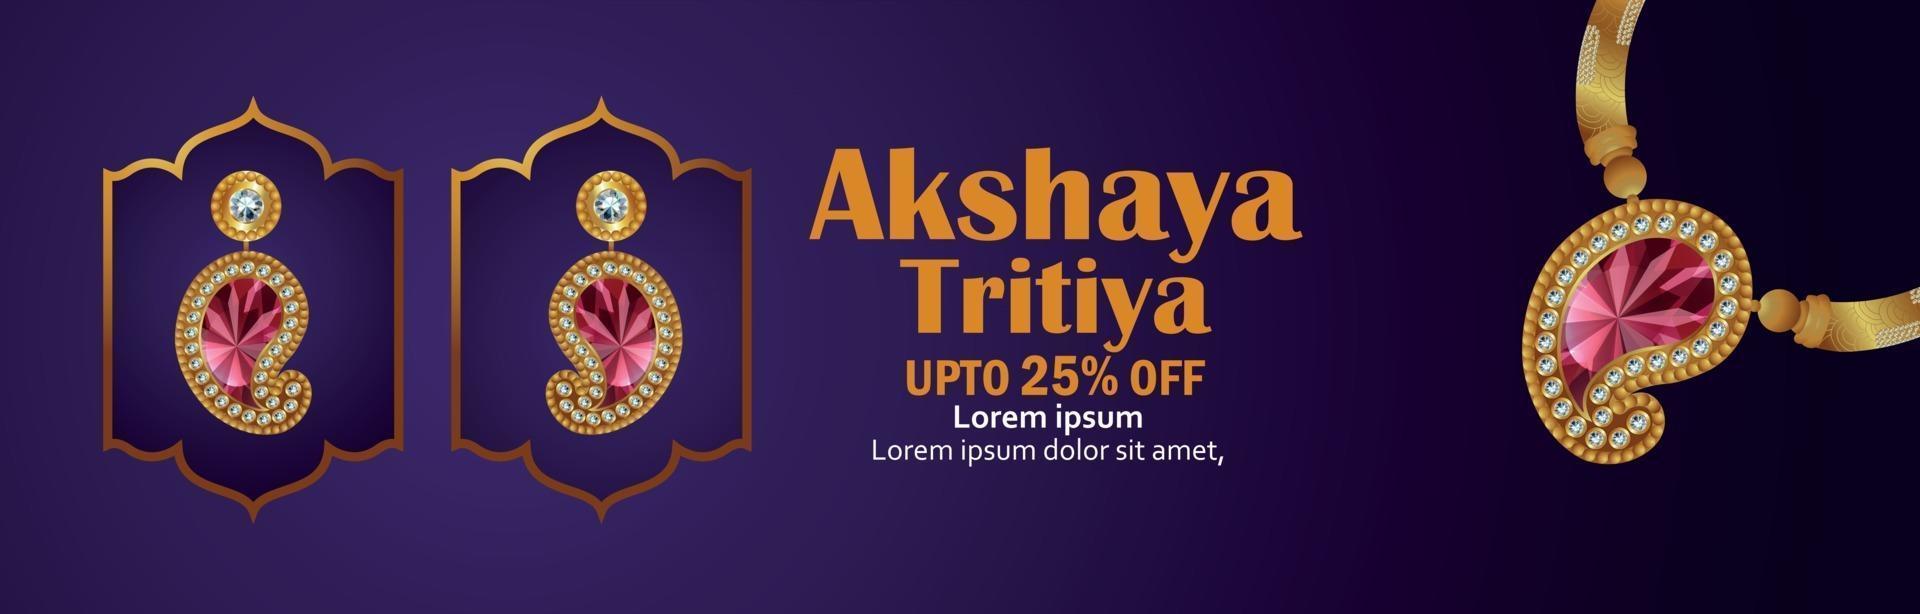 Indian festival of akshaya tritiya sale header with gold necklace vector